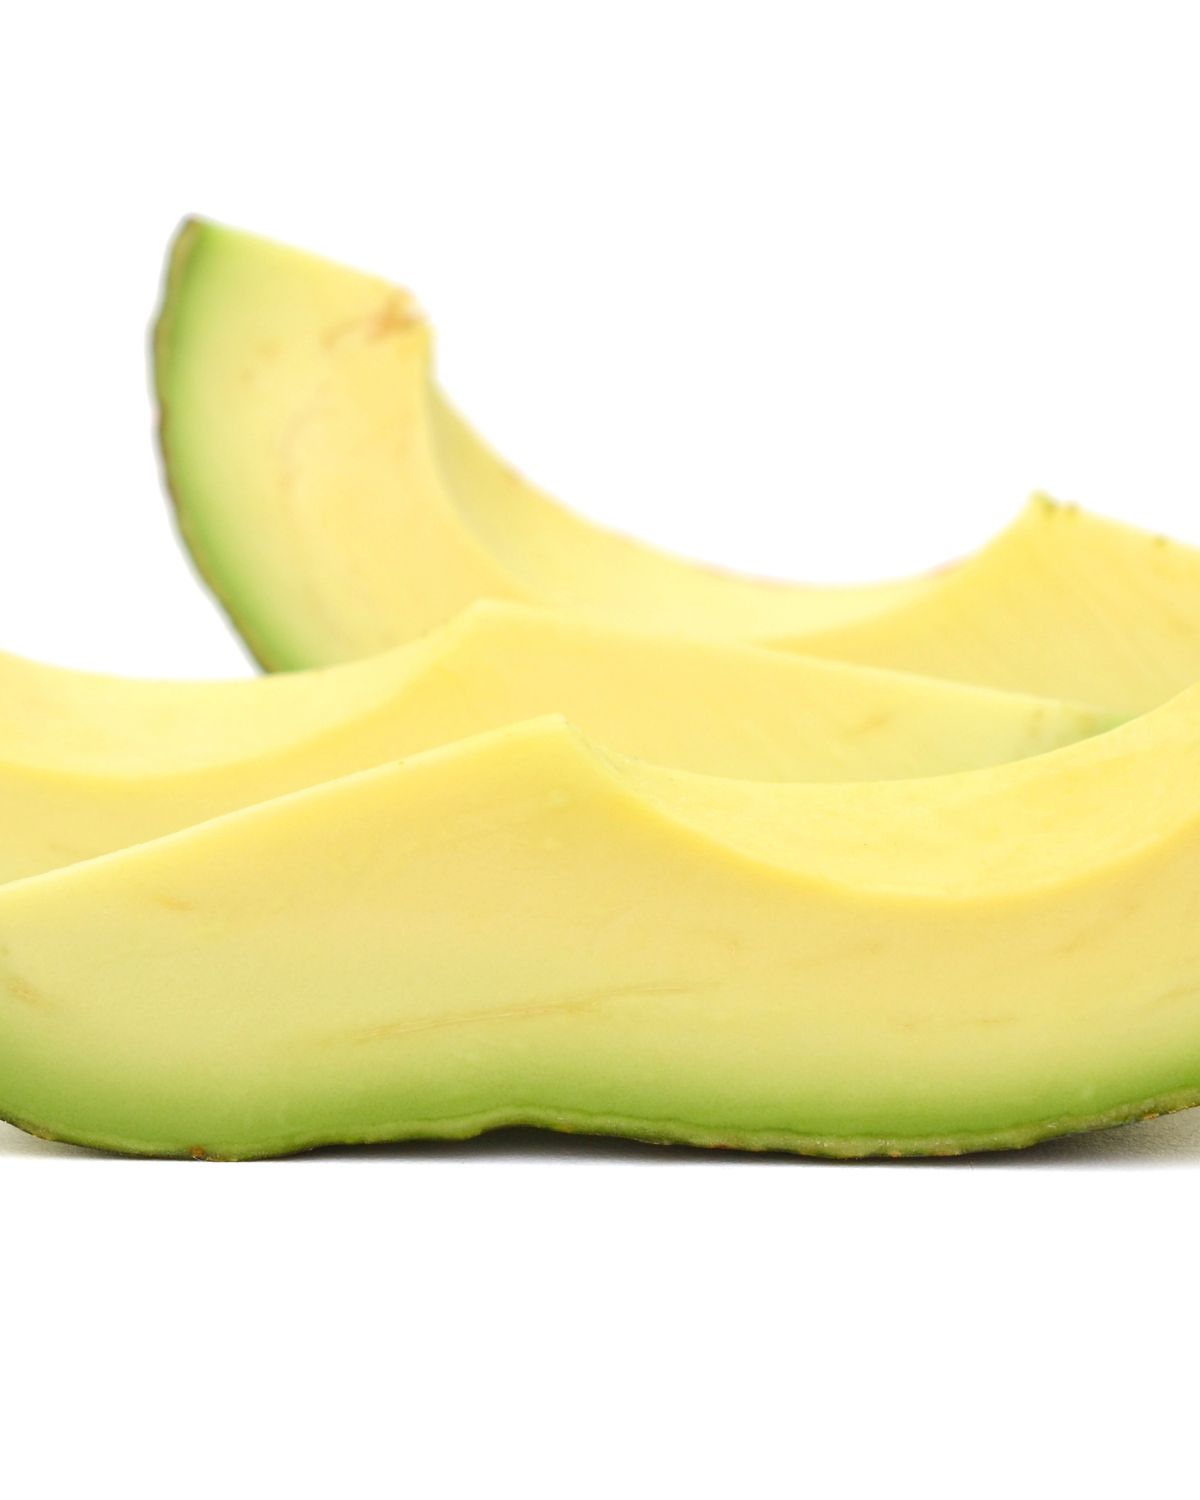 Slices of avocado.